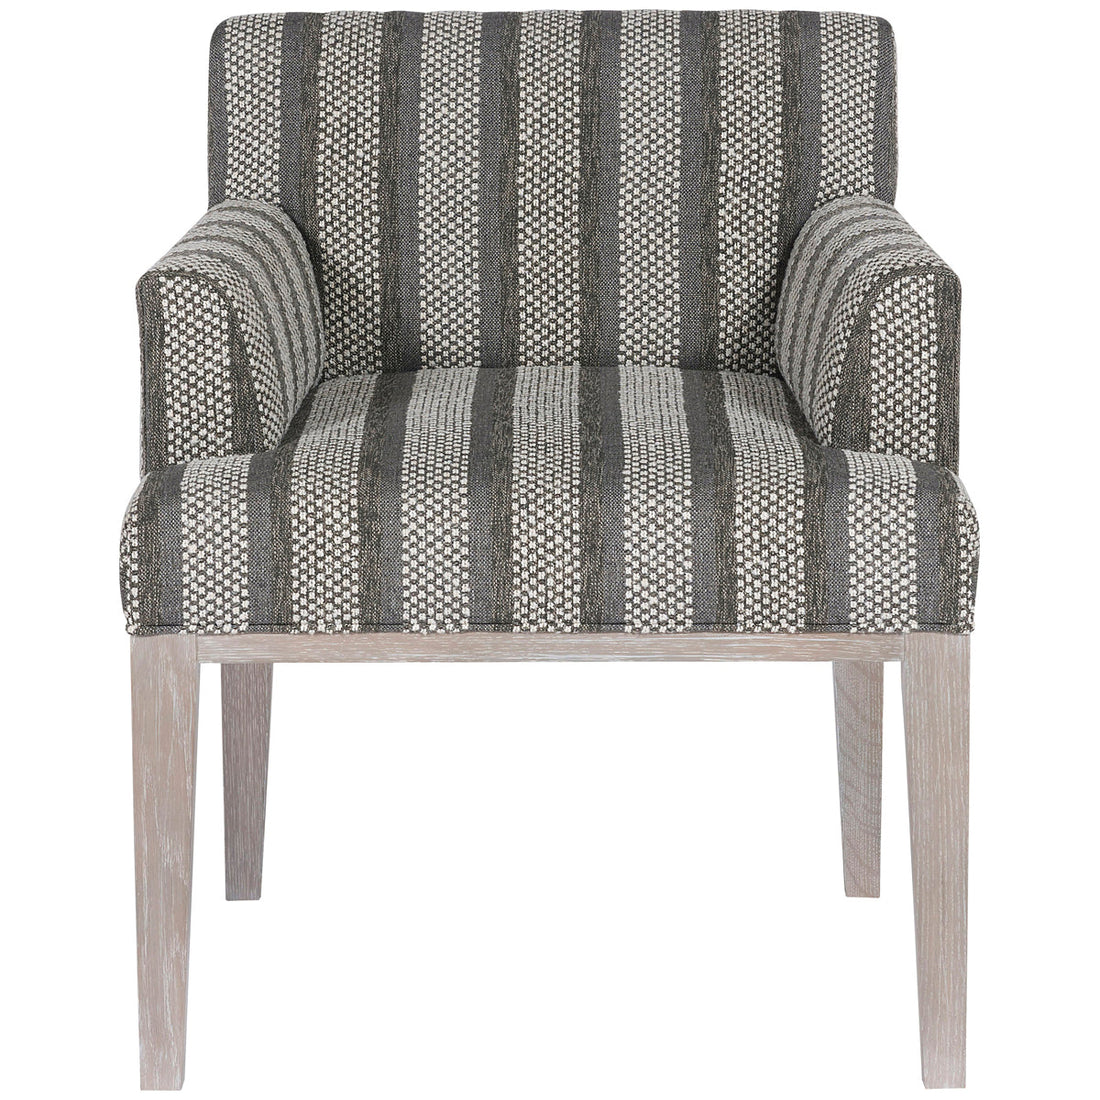 Vanguard Furniture Spencer Arm Chair